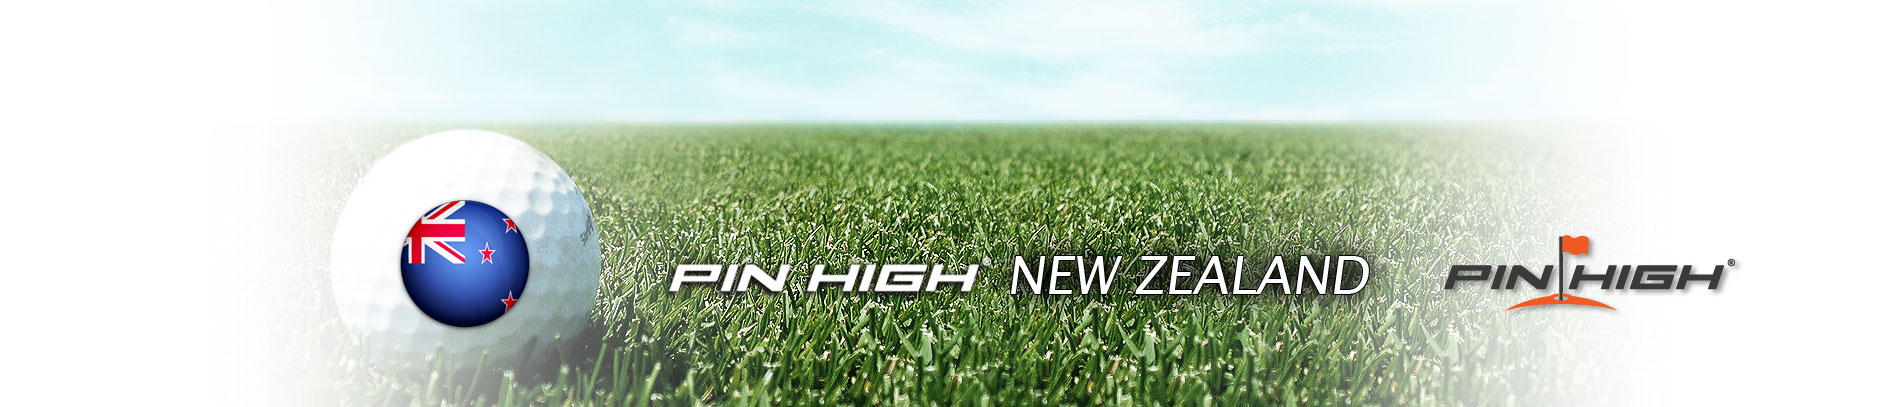 PIN HIGH NEW ZEALAND